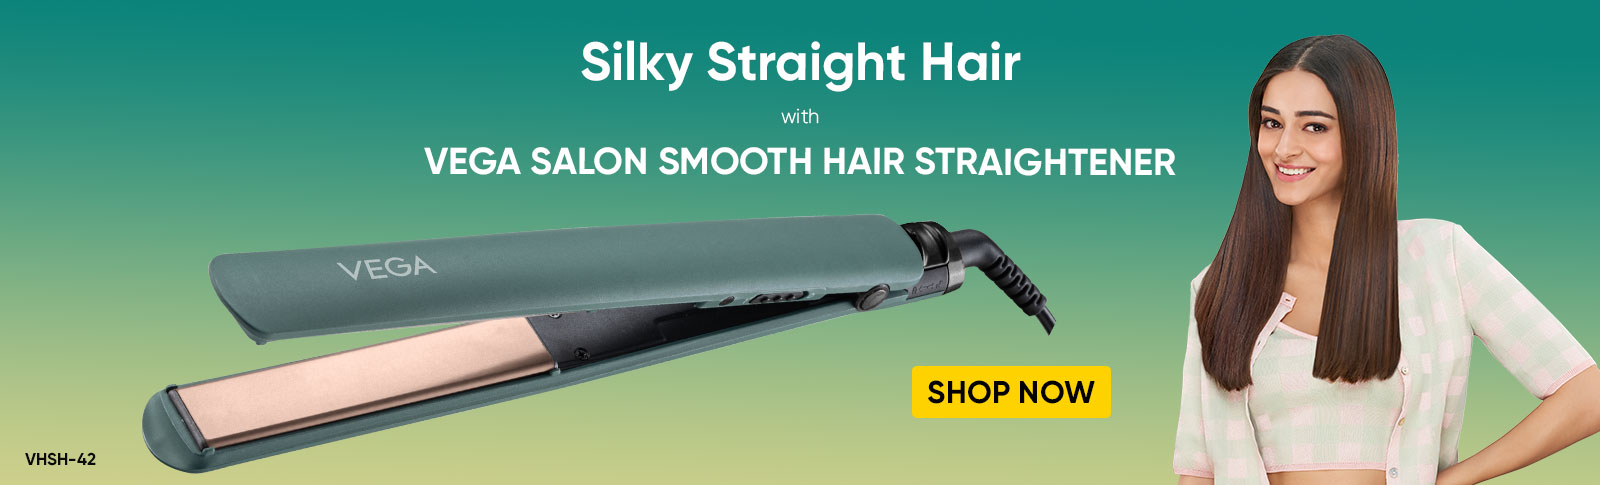 Vega Salon Smooth Hair Straightener